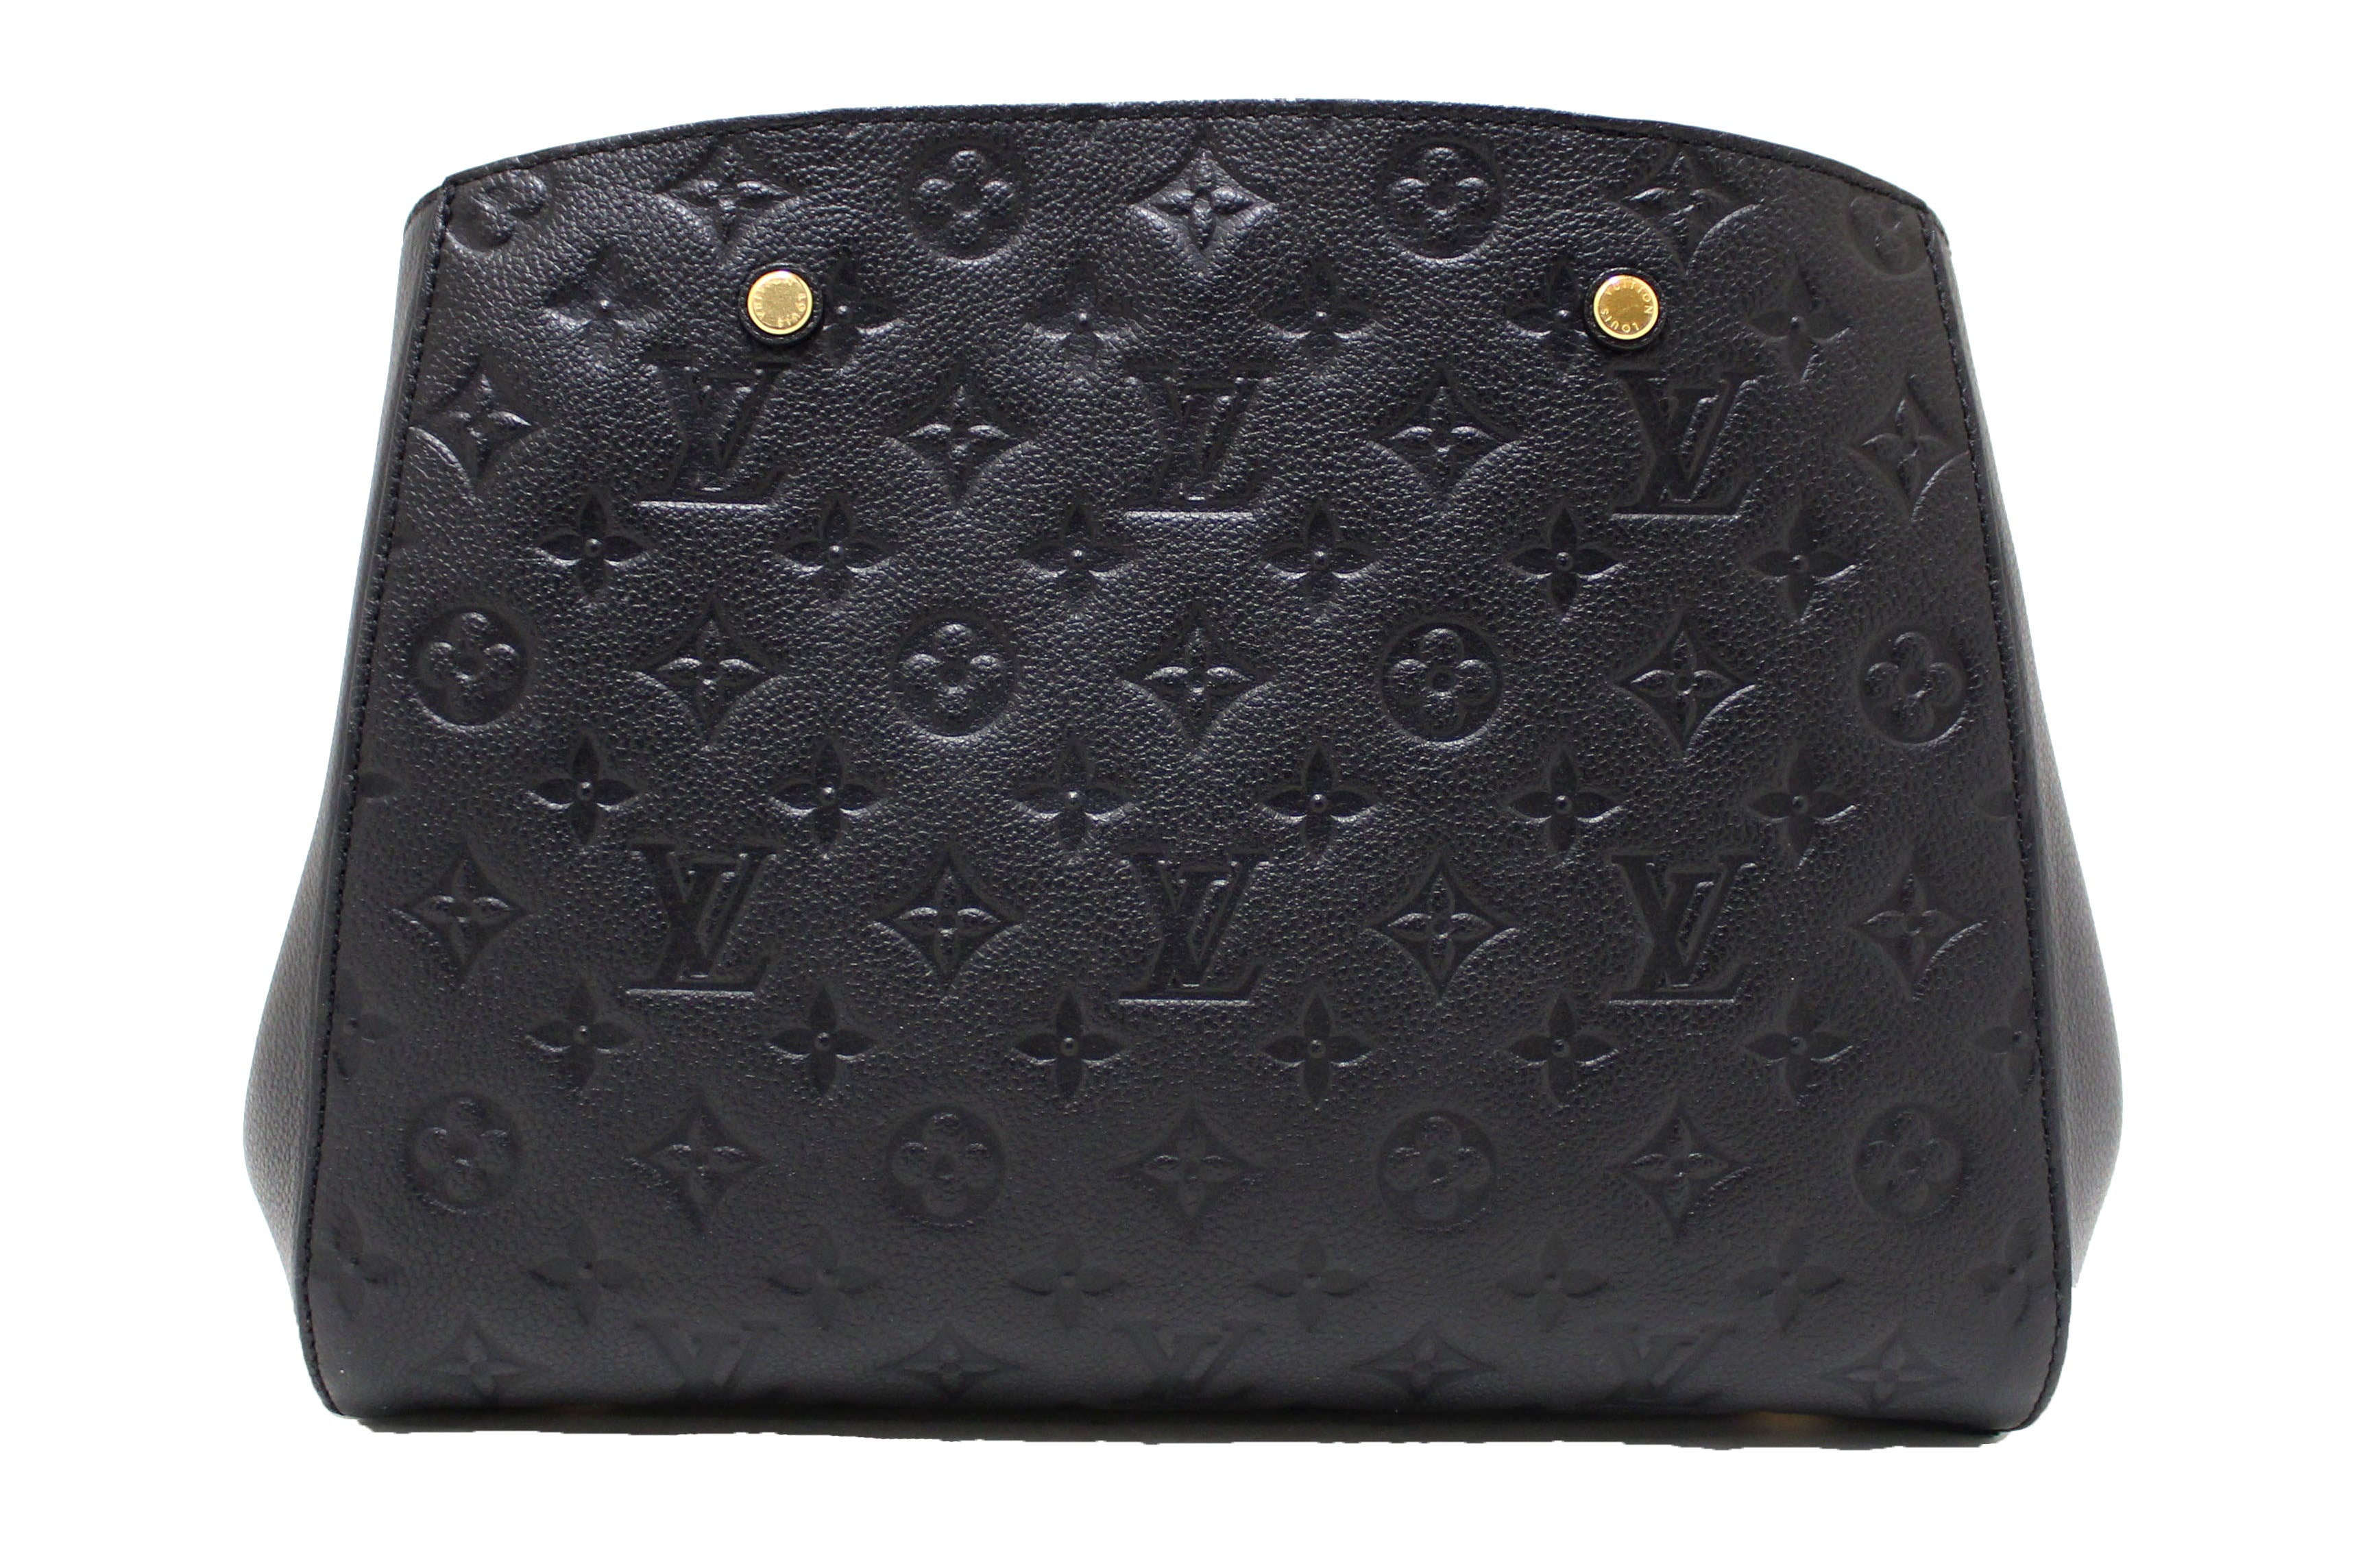 Louis Vuitton Montaigne MM Monogram Empreinte Handbag w/Shoulder